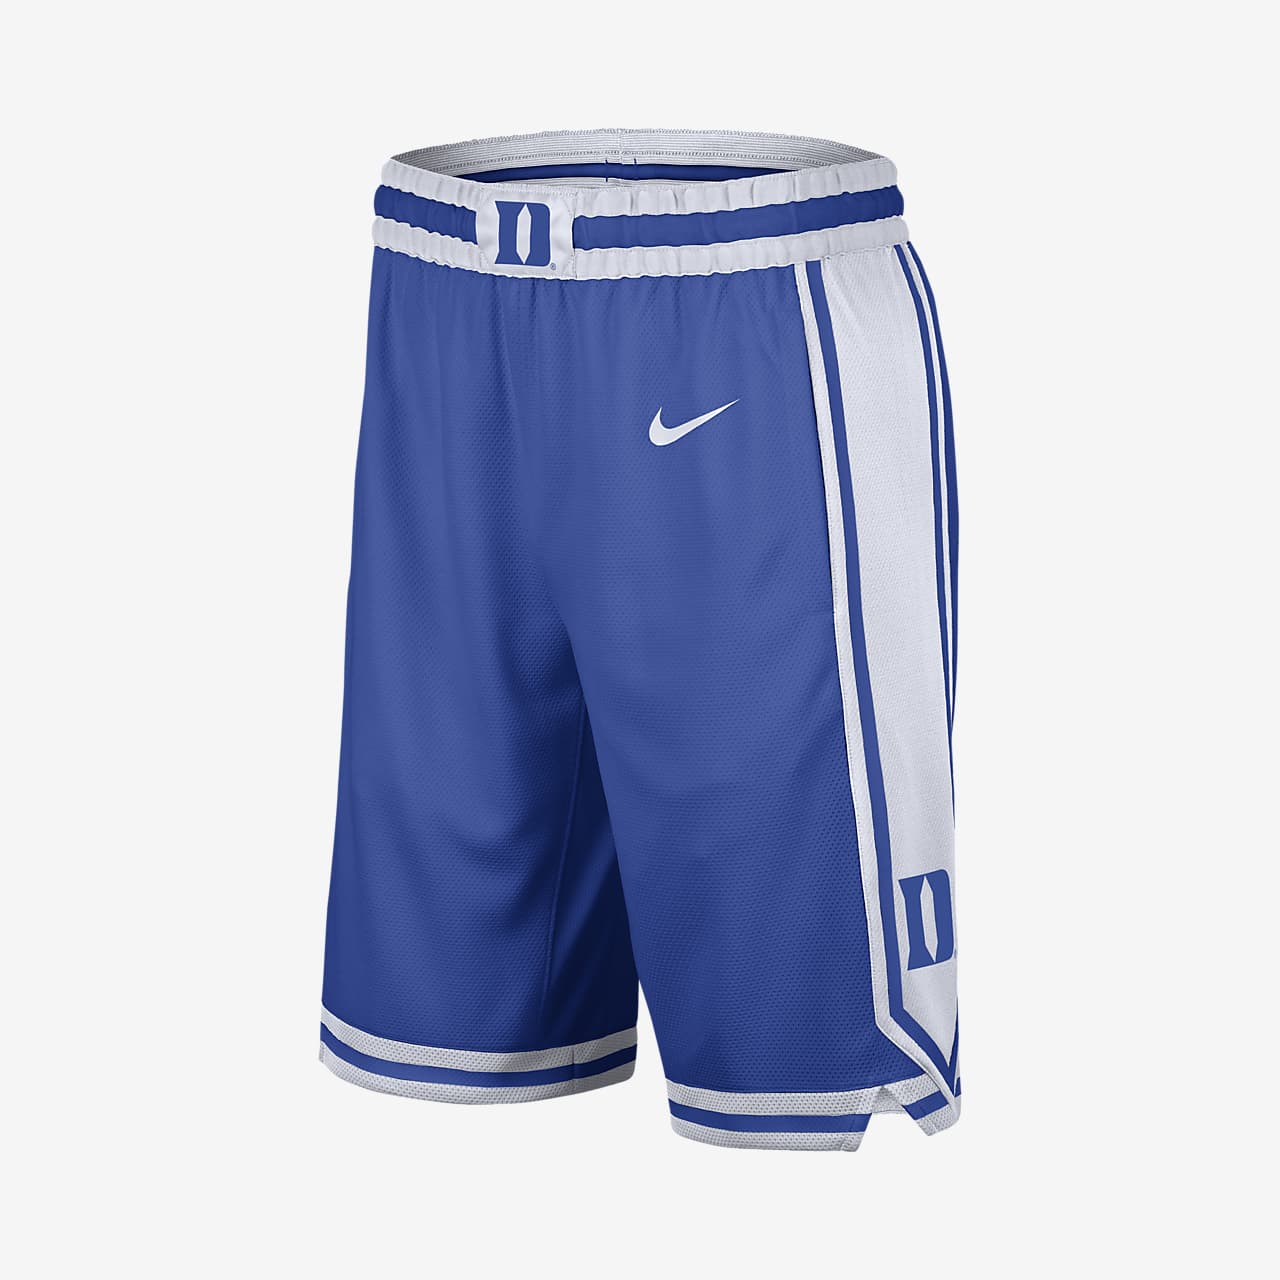 Nike College Dri-FIT (Duke) Men's Basketball Shorts